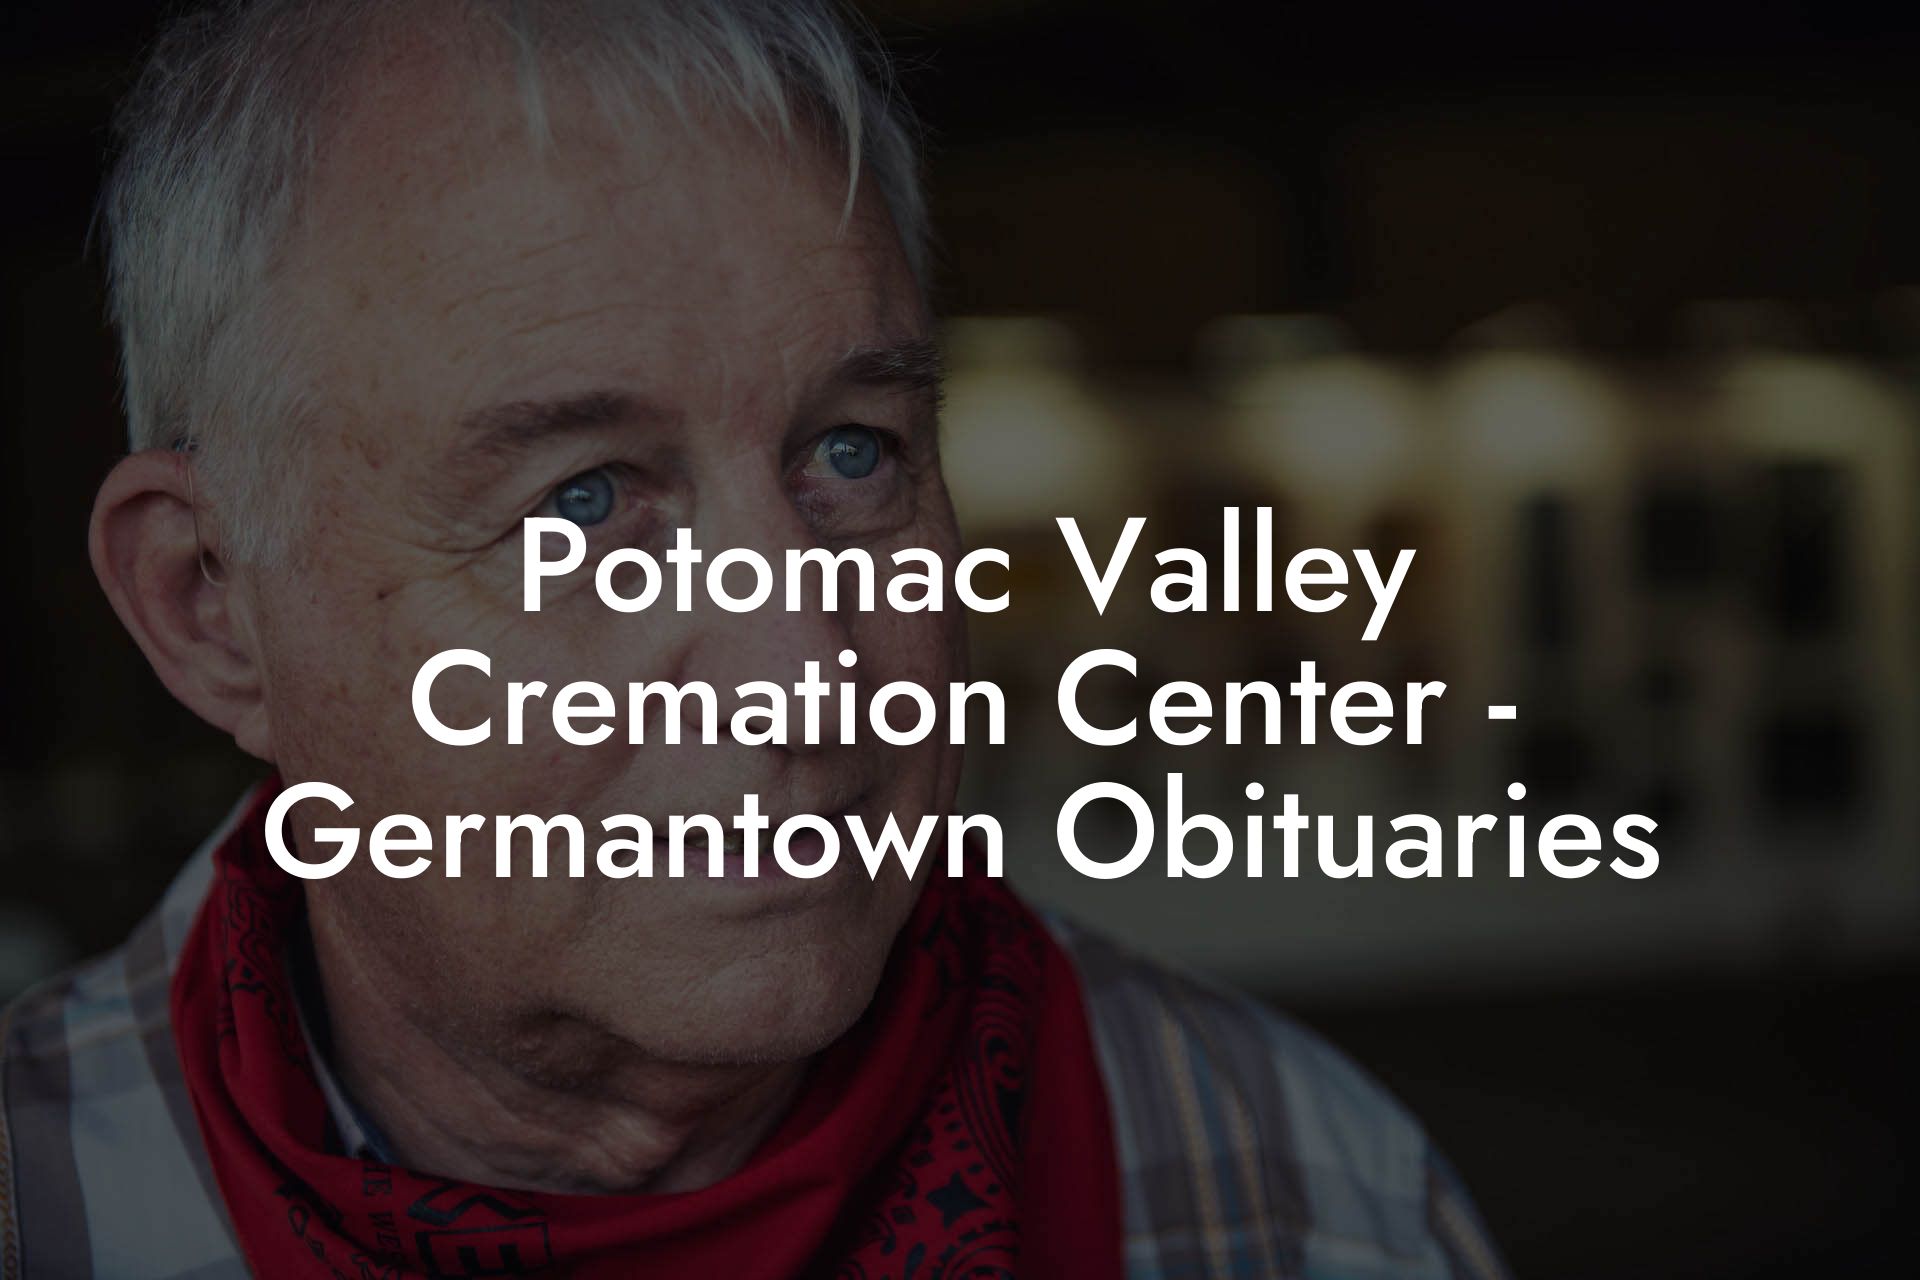 Potomac Valley Cremation Center - Germantown Obituaries